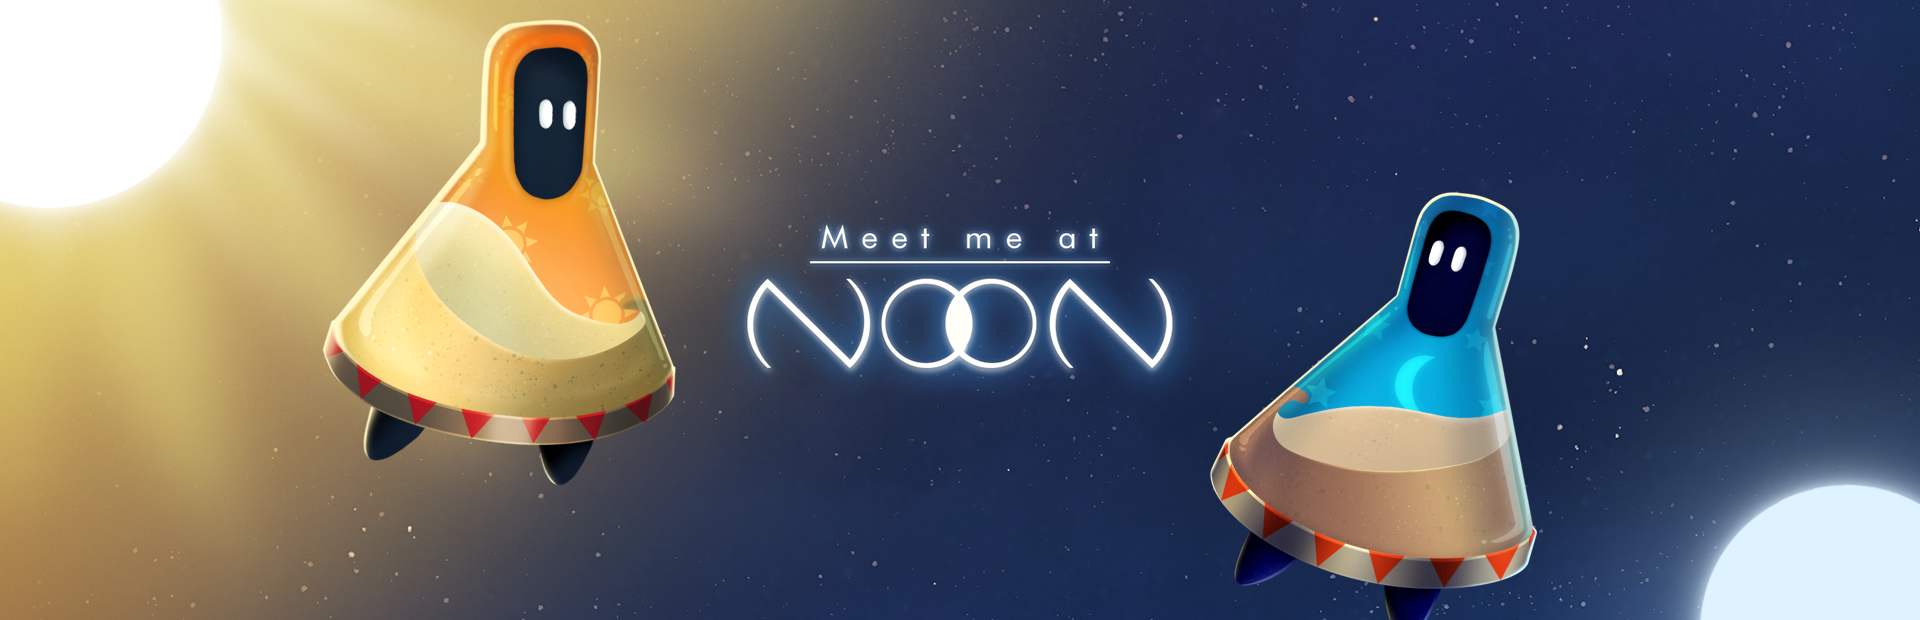 Meet me at NooN